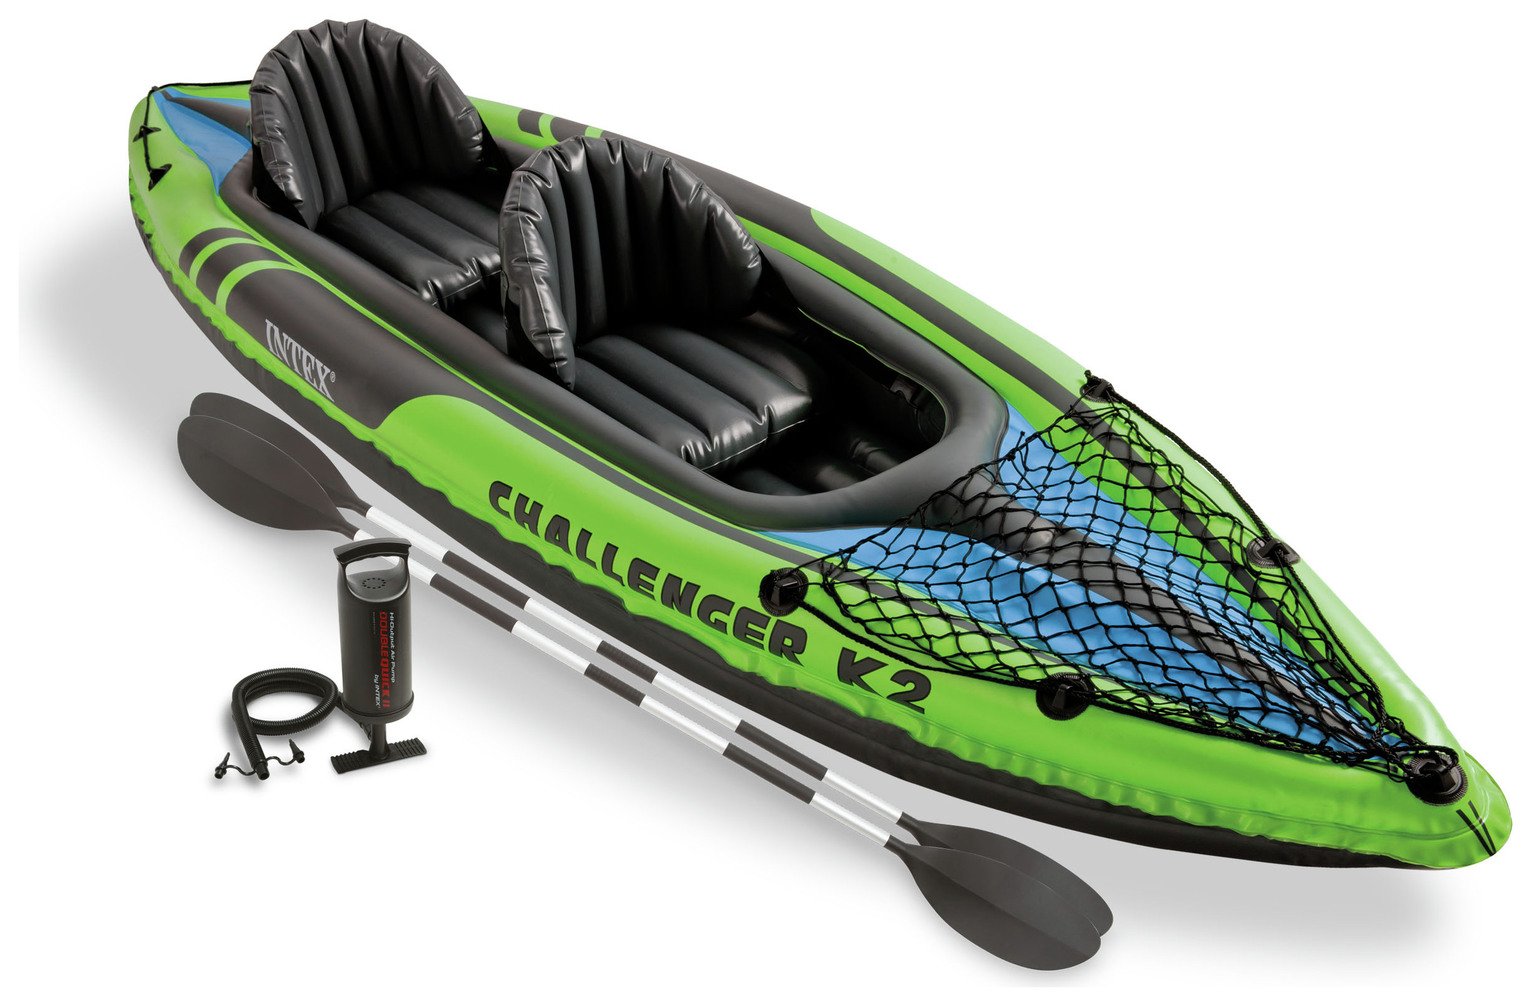 Intex Challenger K2 Kayak